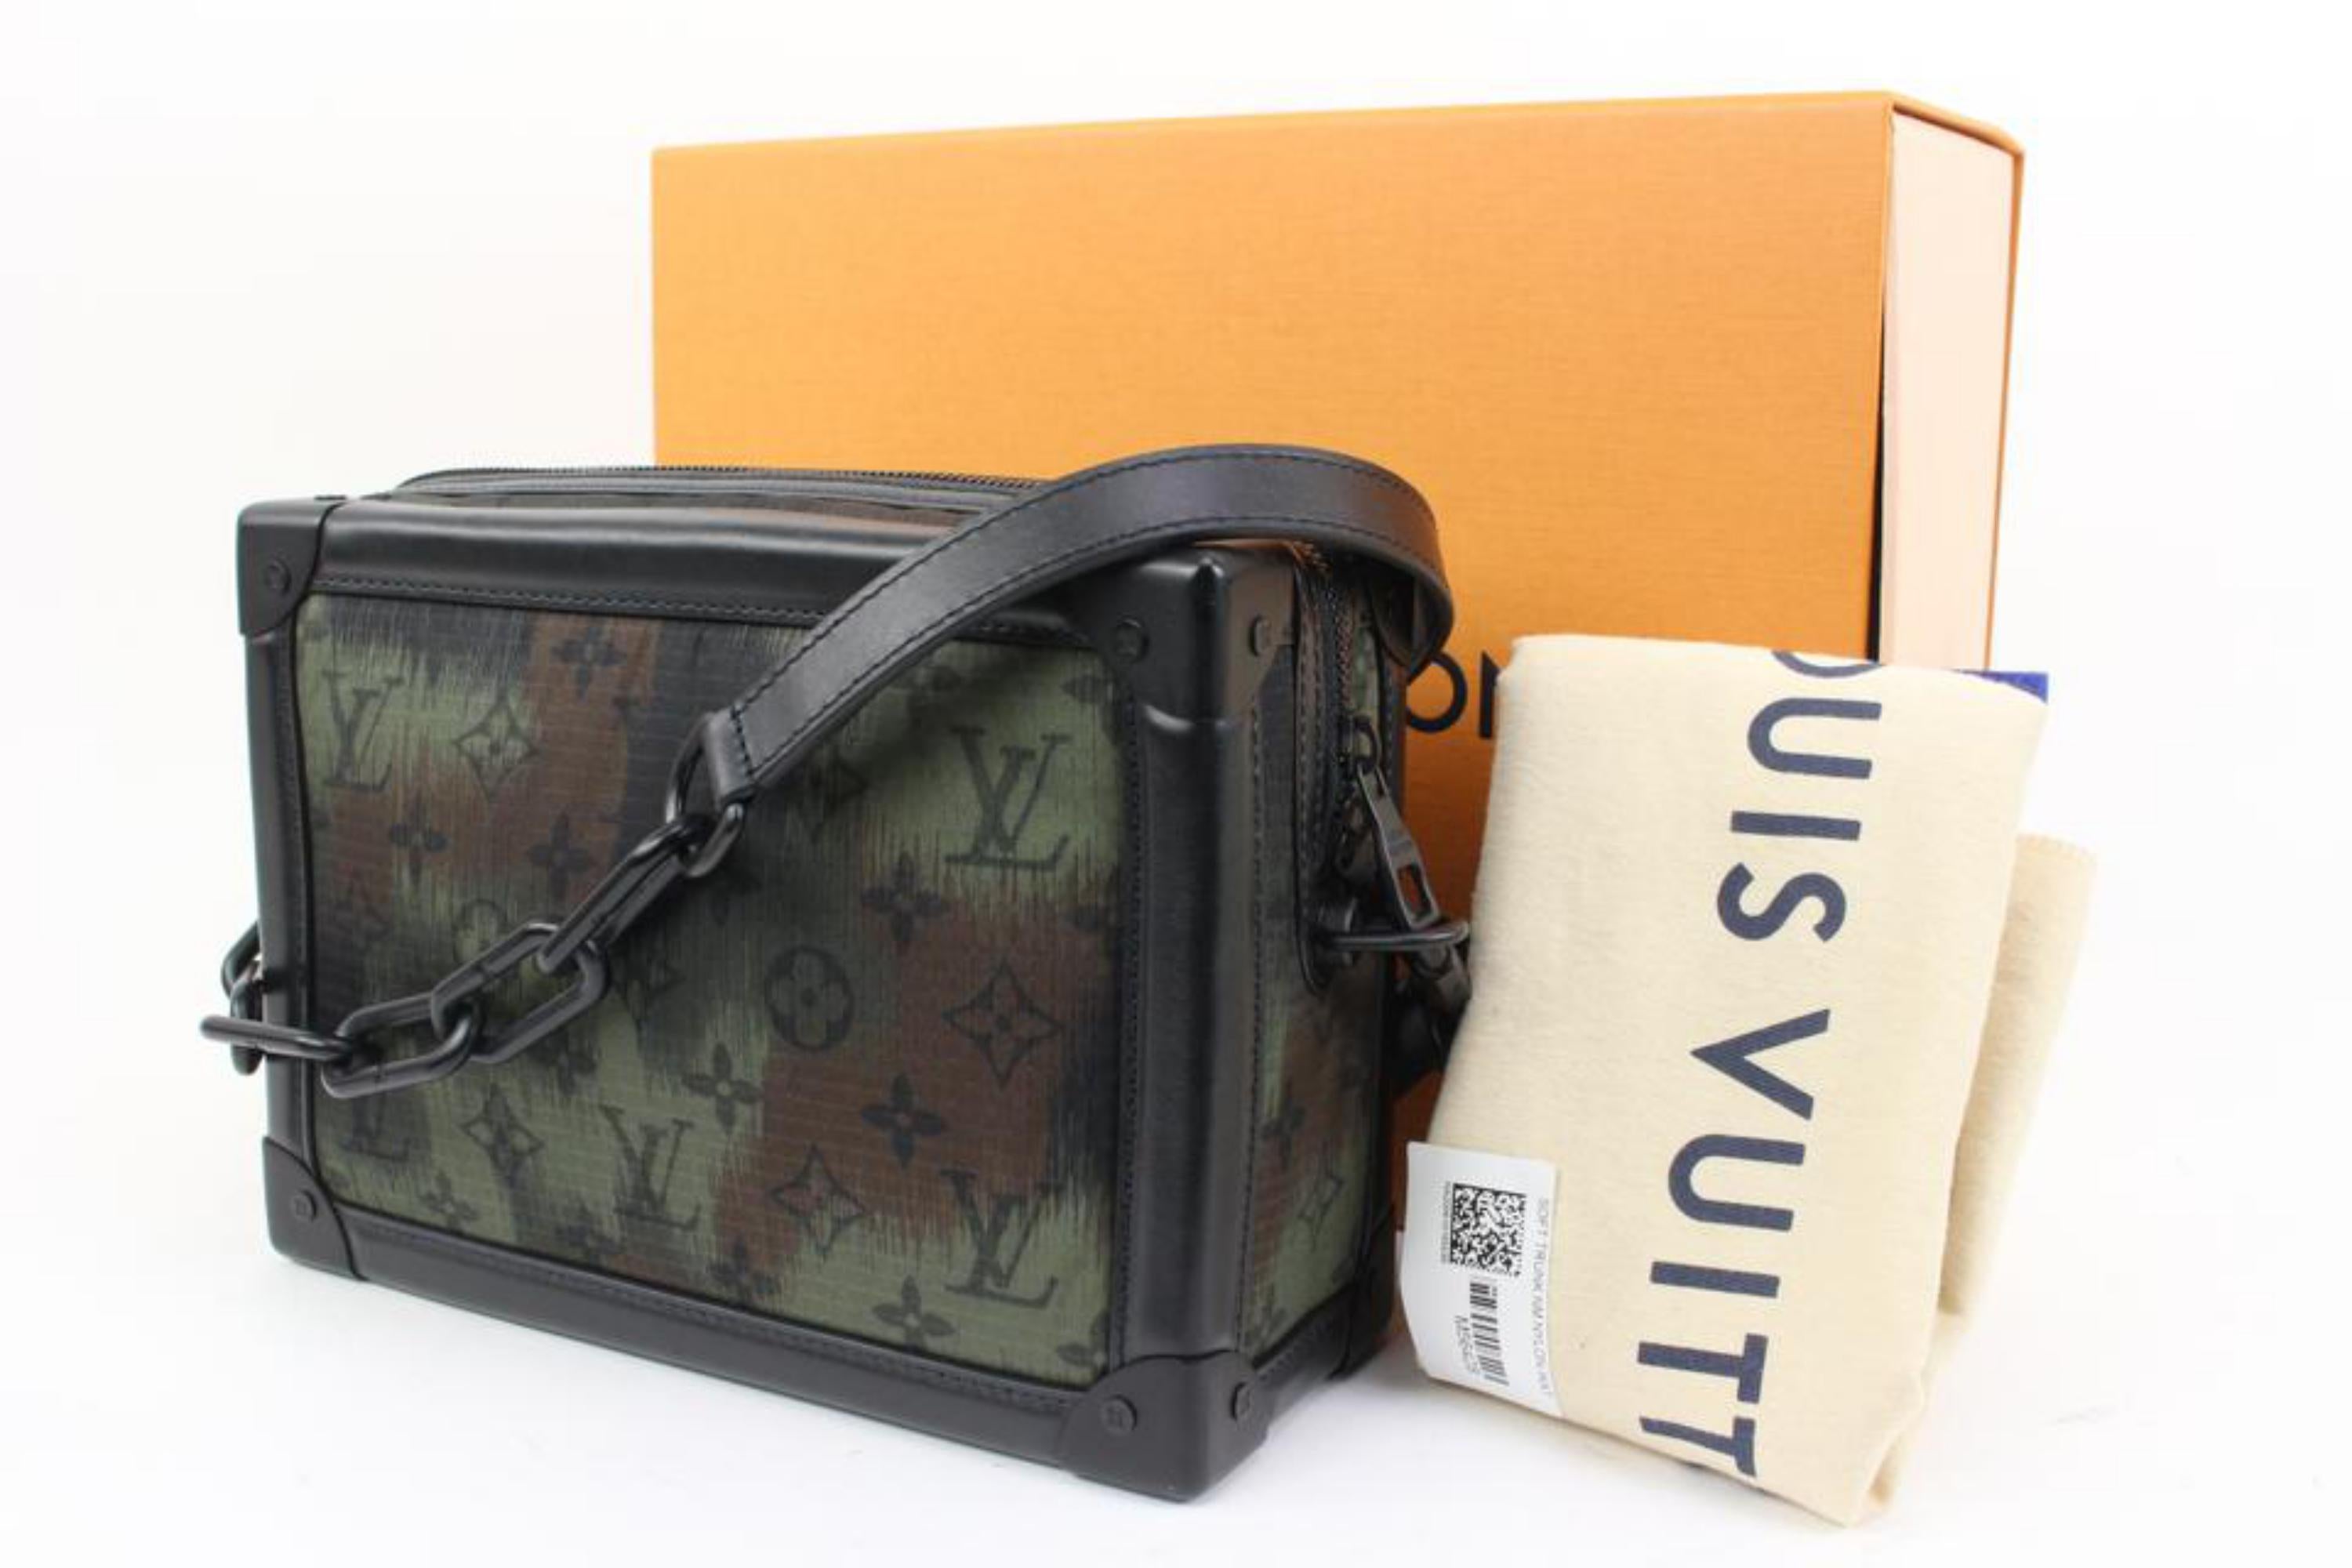 Louis Vuitton MONOGRAM Soft trunk (M44730)